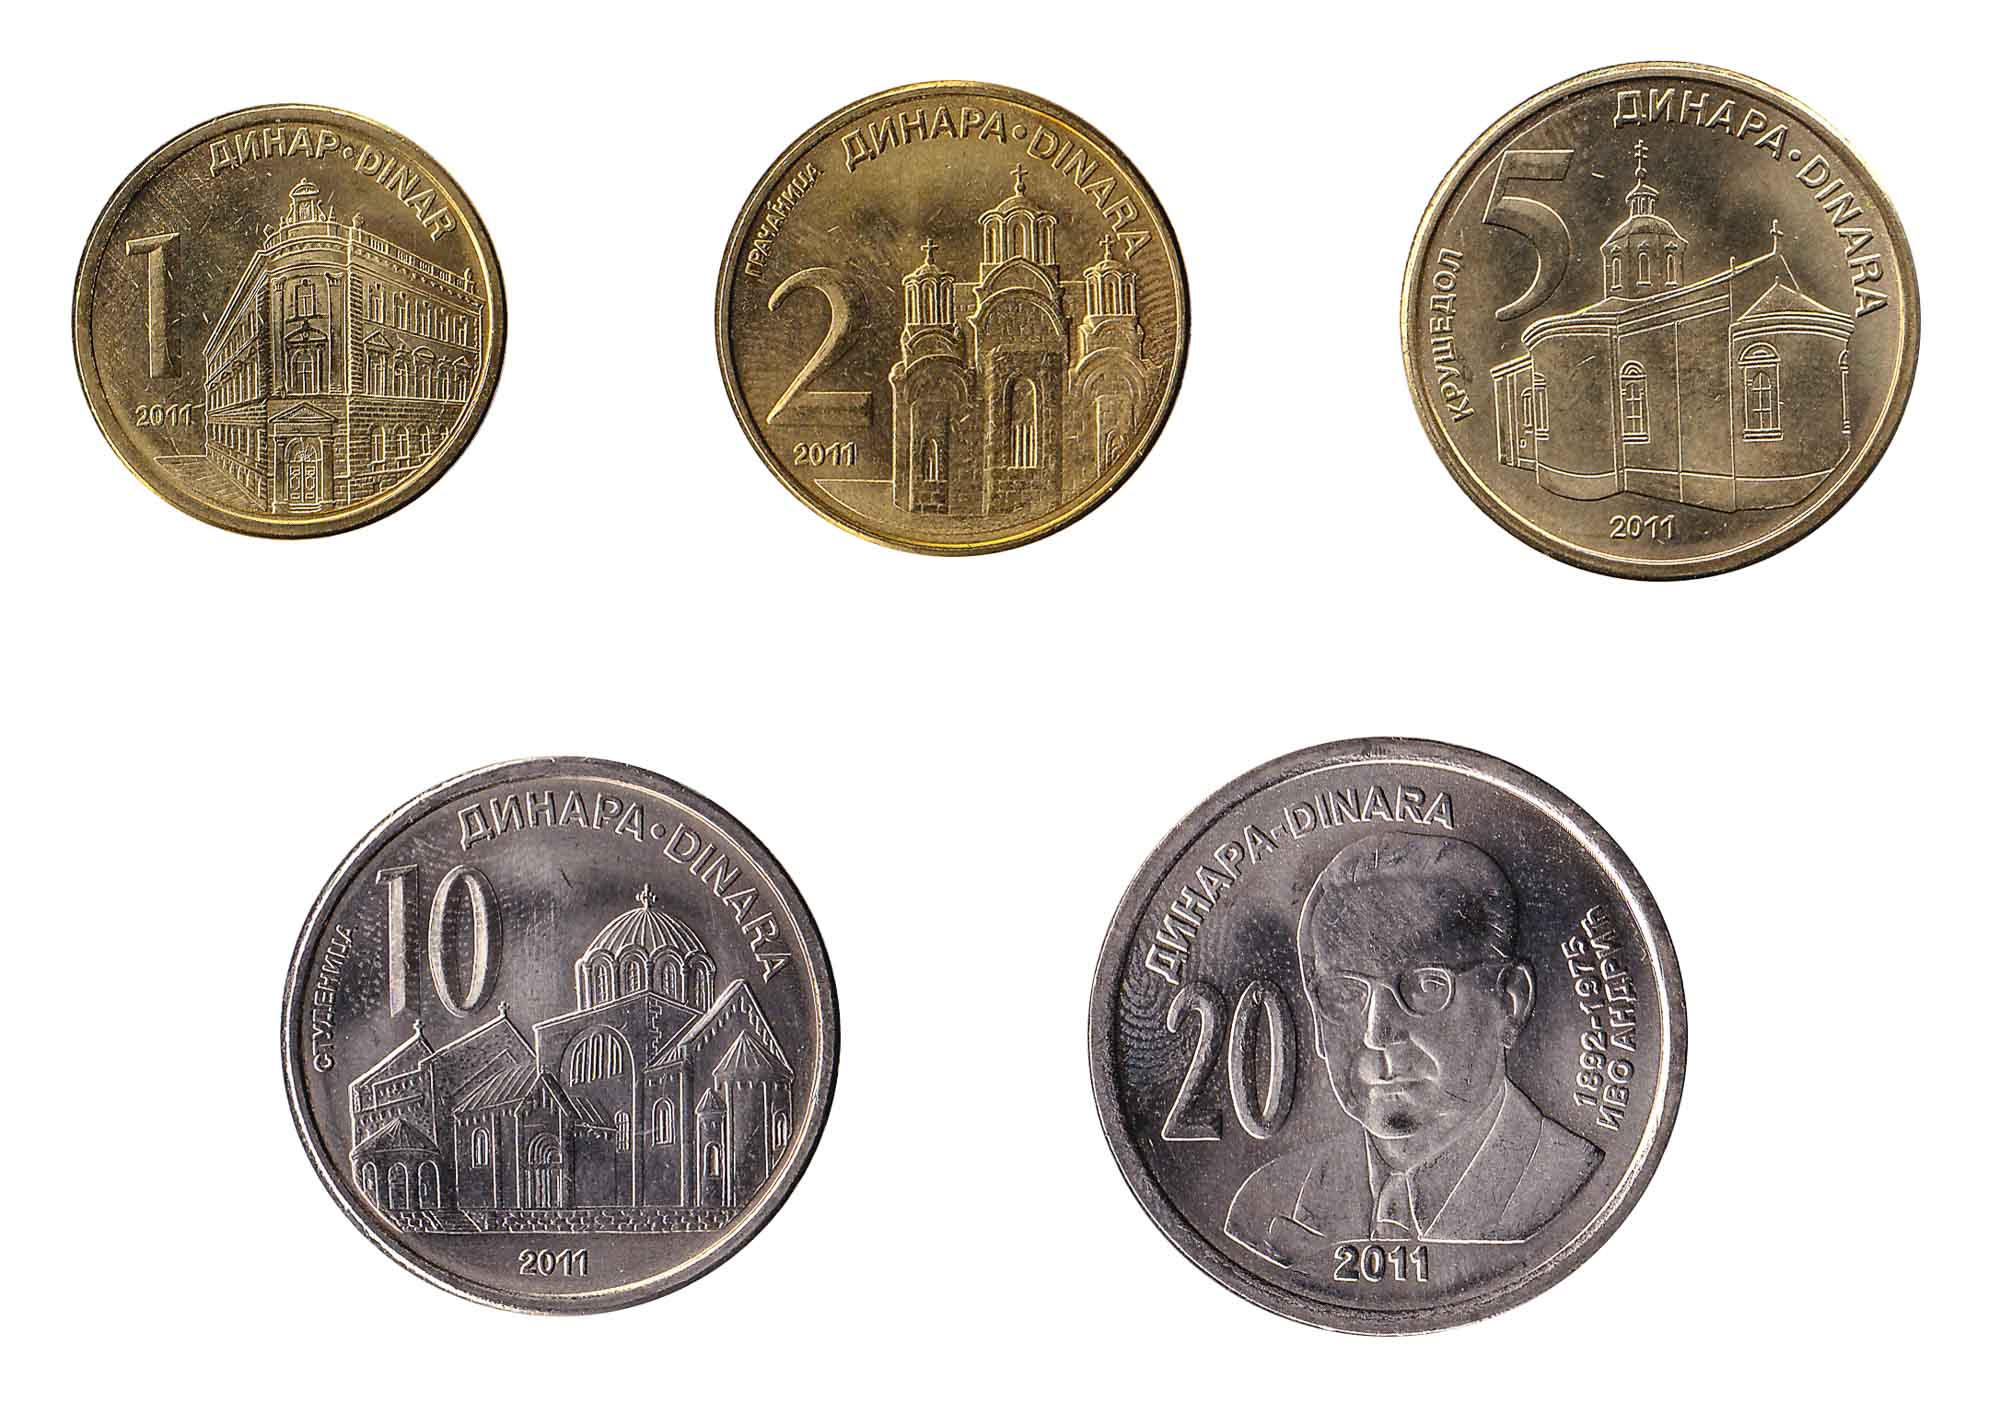 Exchange Serbian Dinara In 3 Easy Steps Leftover Currency